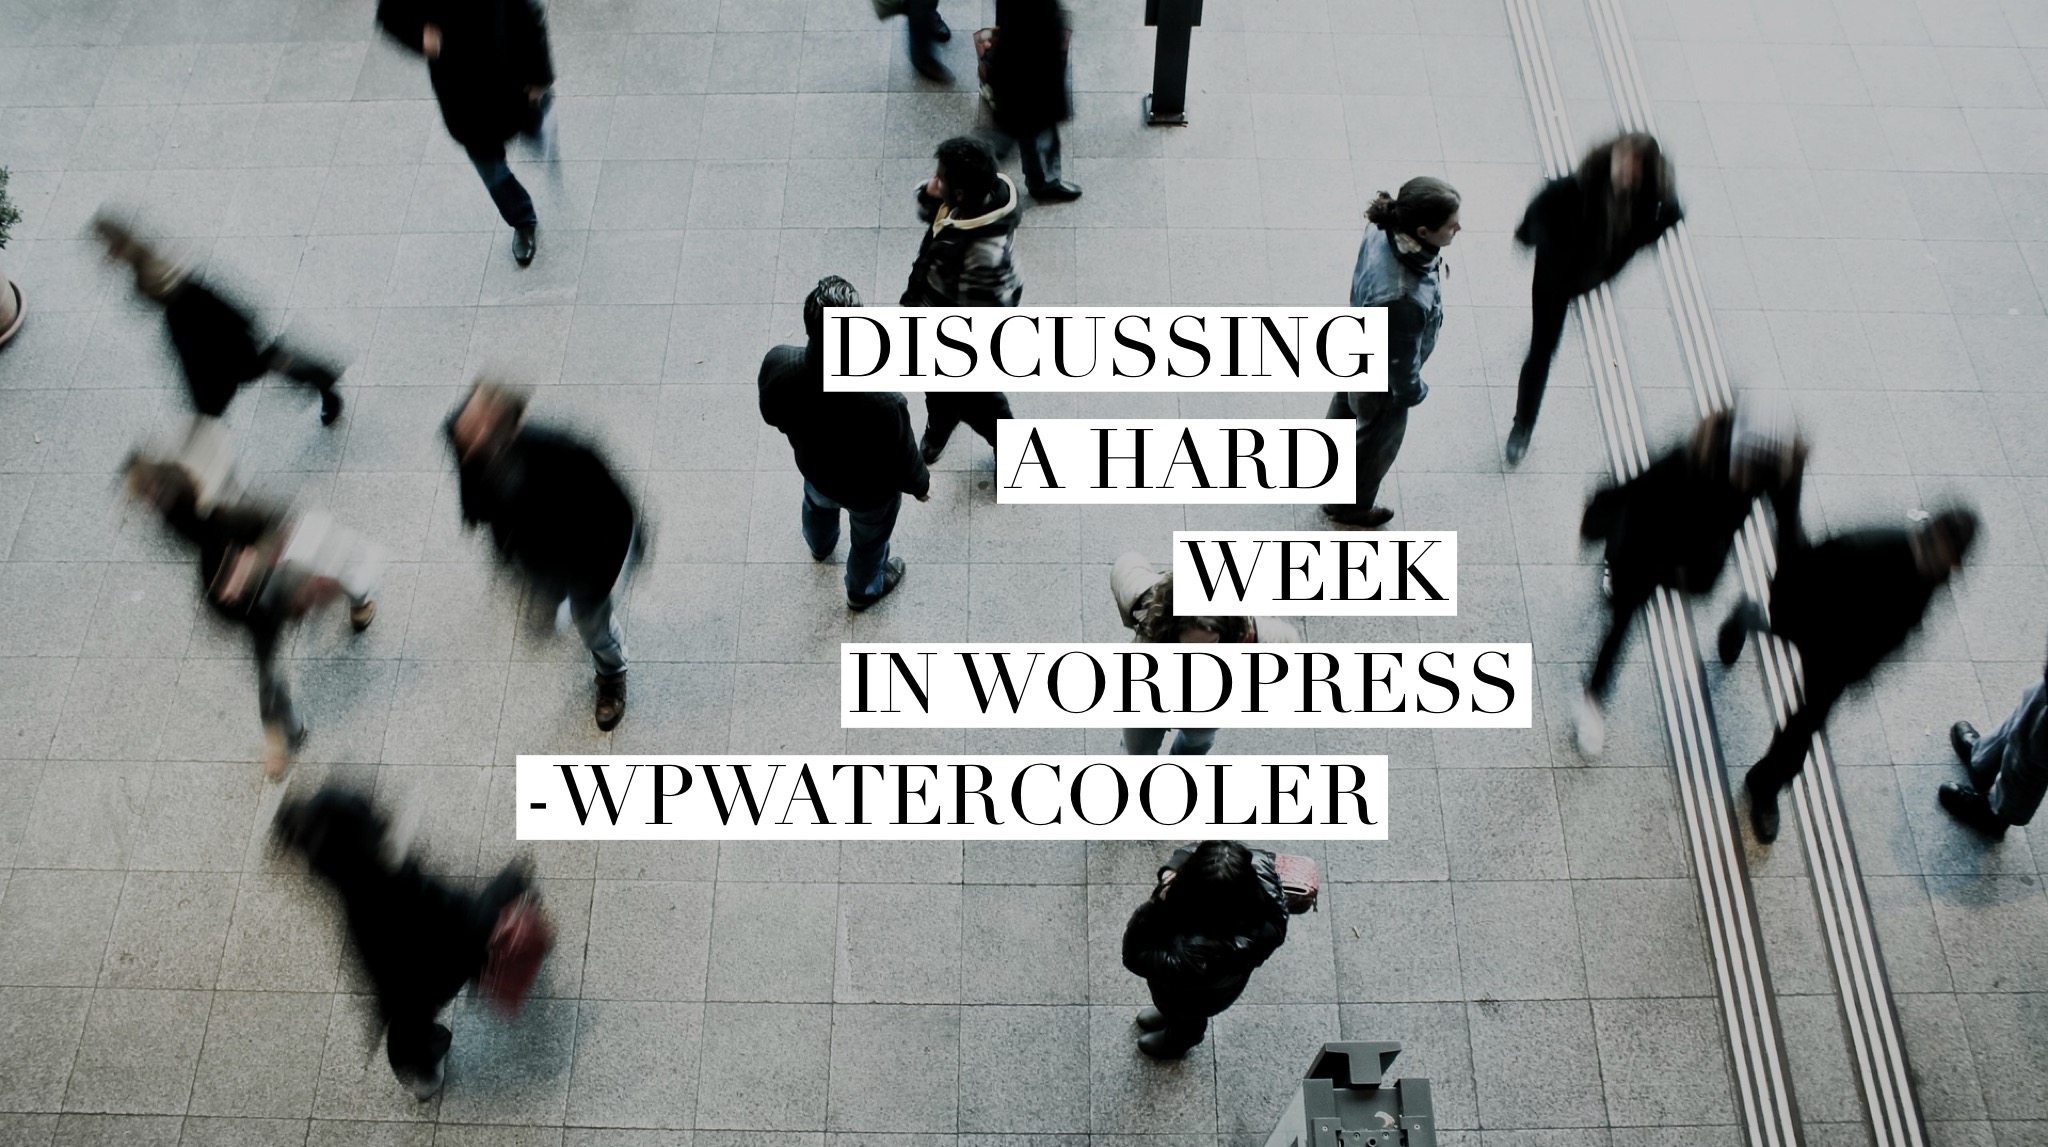 EP316 – Discussing a hard week in WordPress – WPwatercooler